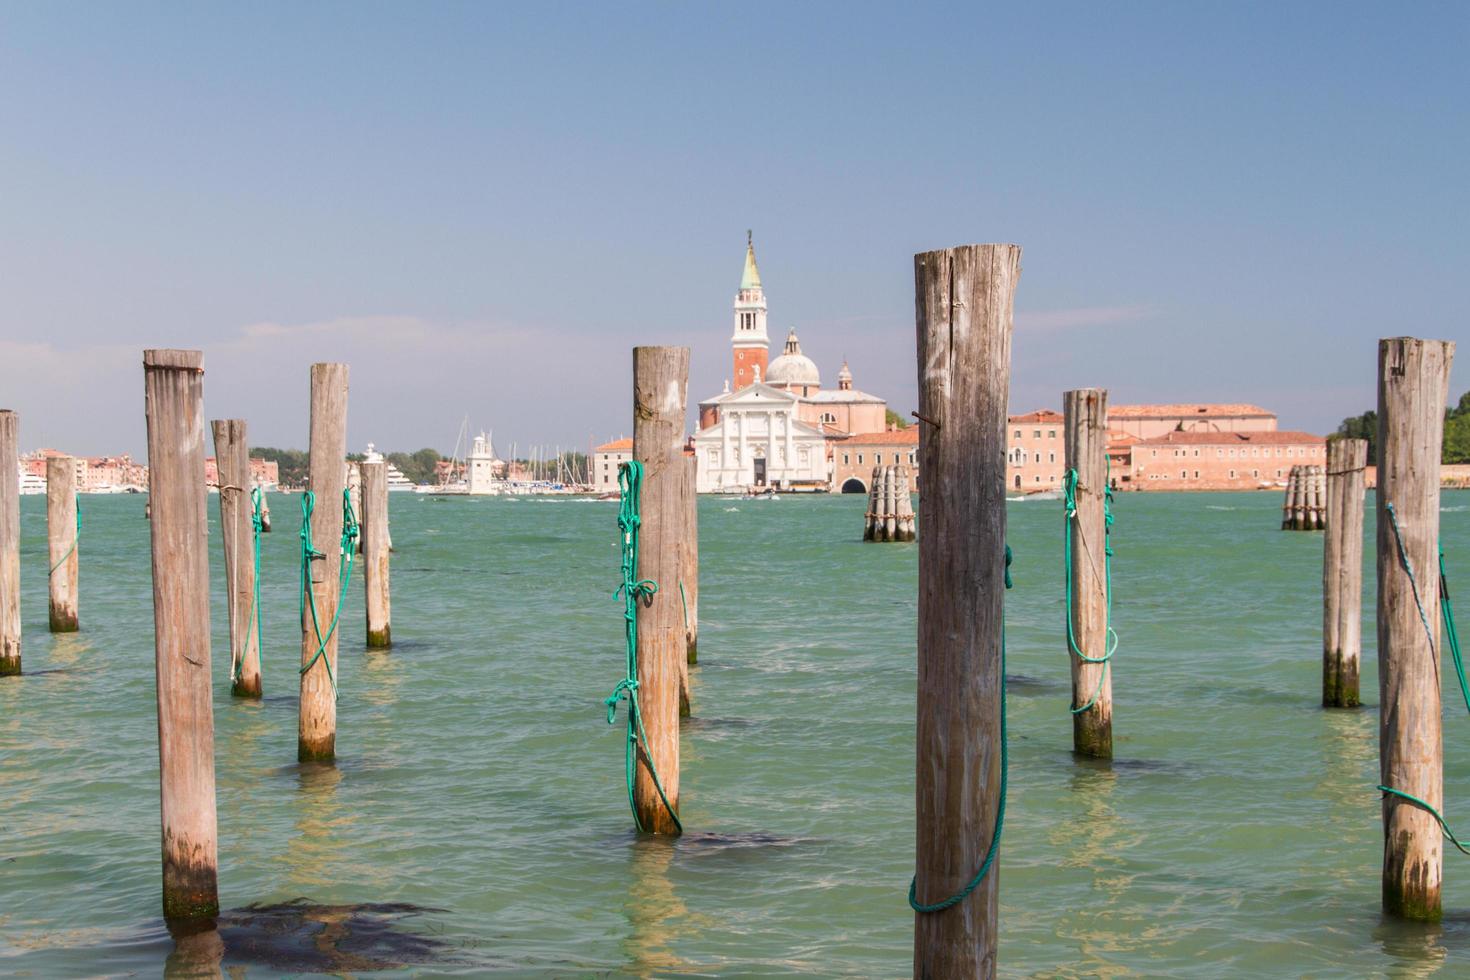 view of San Giorgio island, Venice, Italy photo